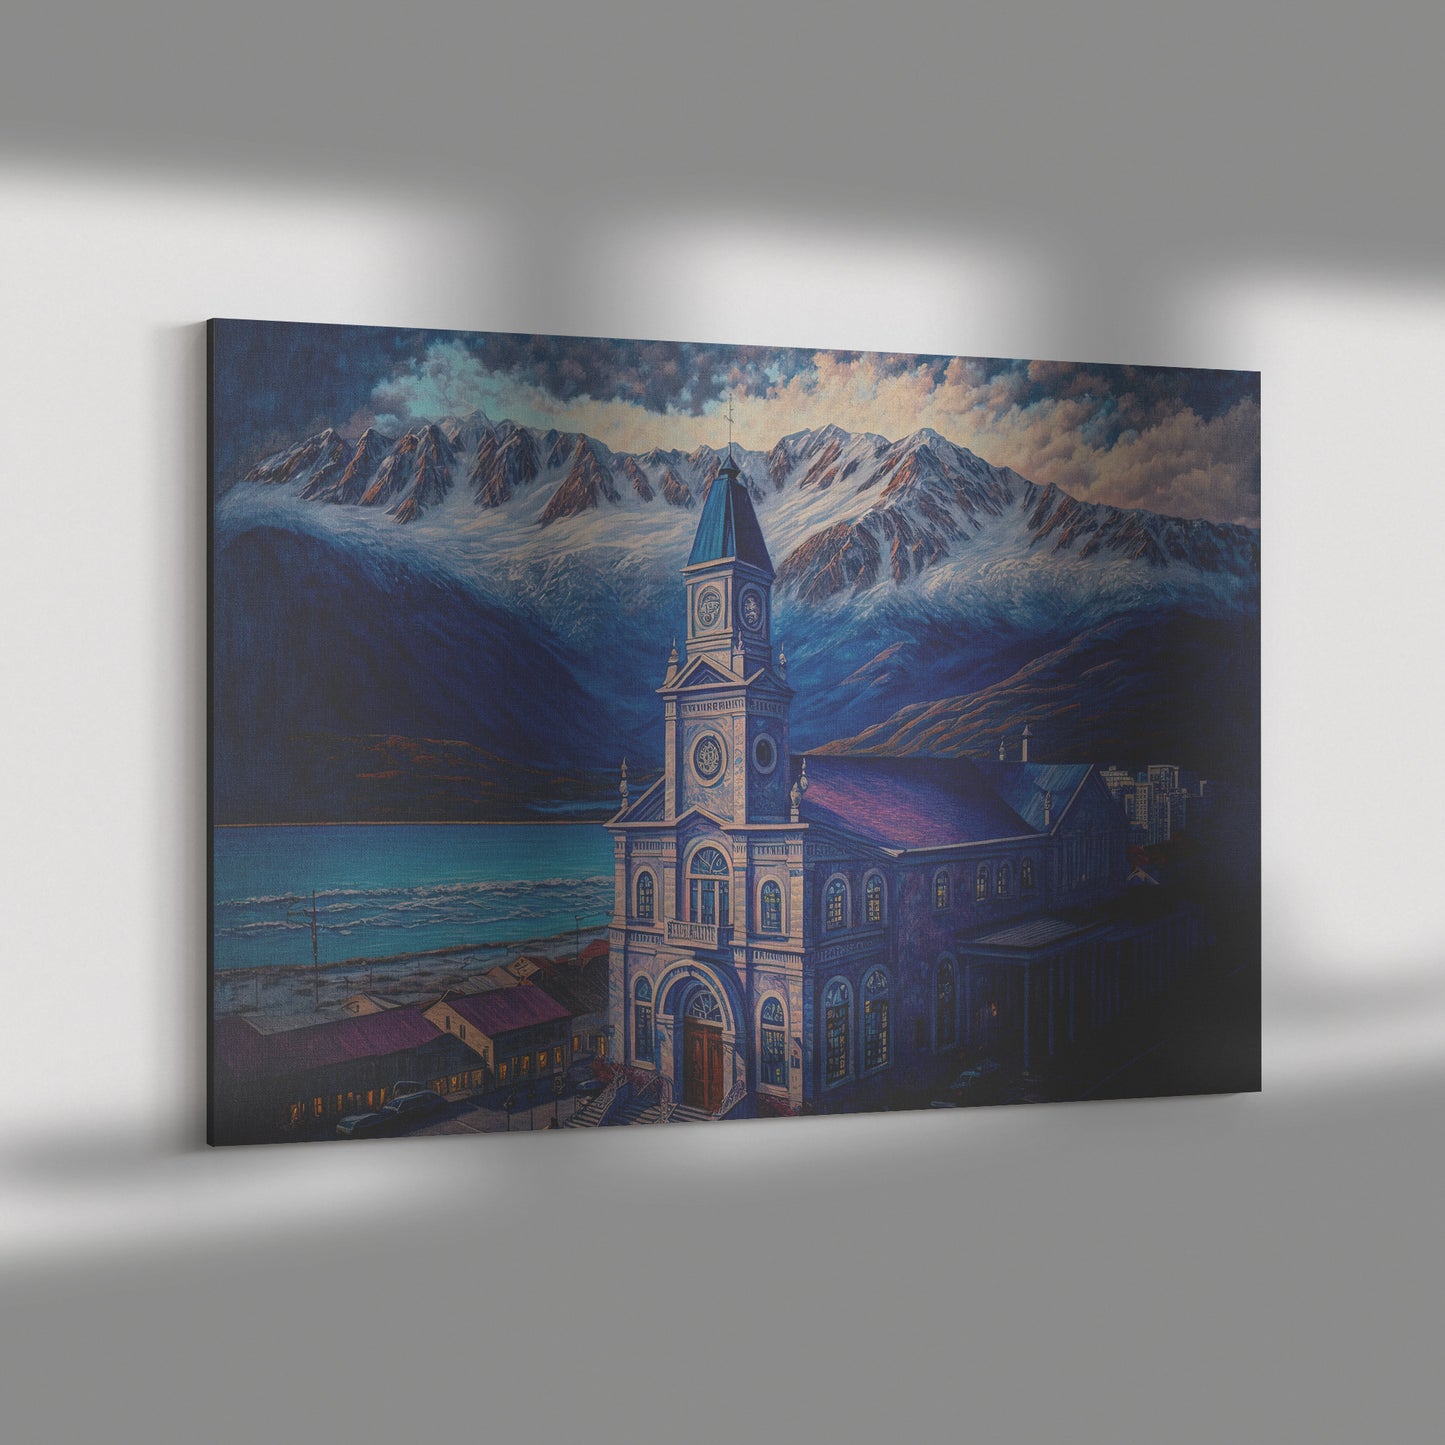 Patagonia Landscape Print, Ushuaia Patagonia Mountains and Coast Painting, Midjourney AI Art